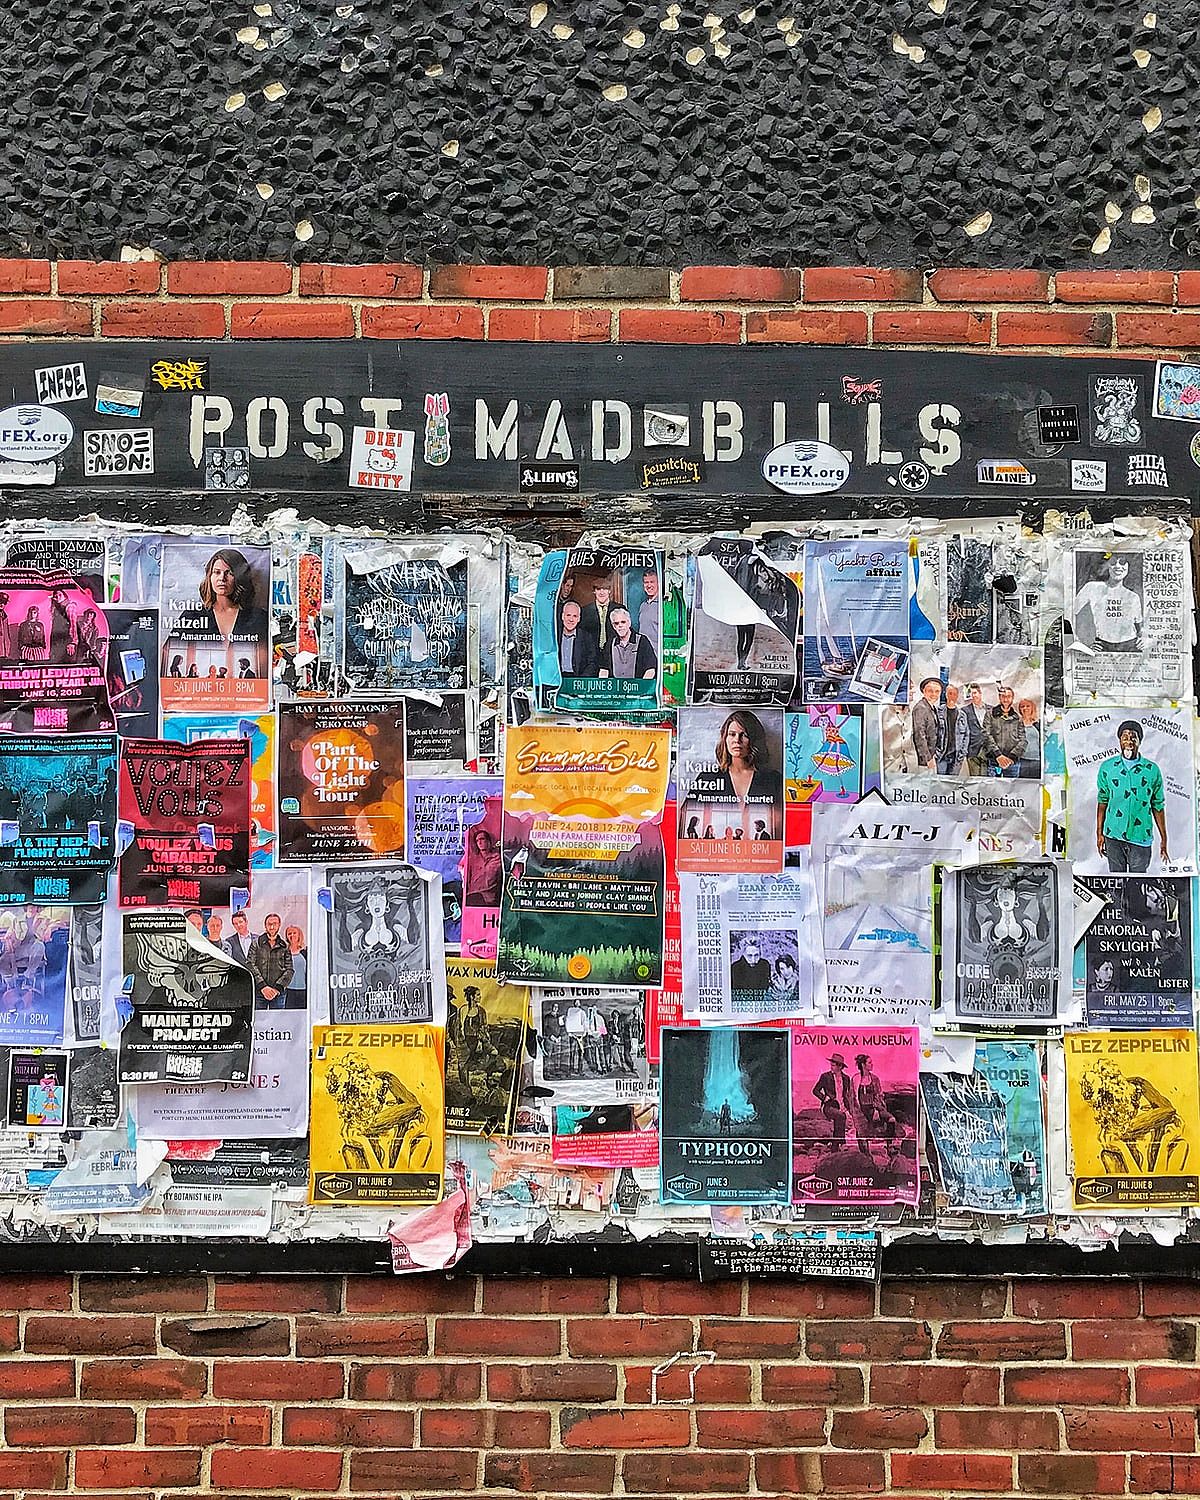 Post Mad Bills show board in Portland, Maine.